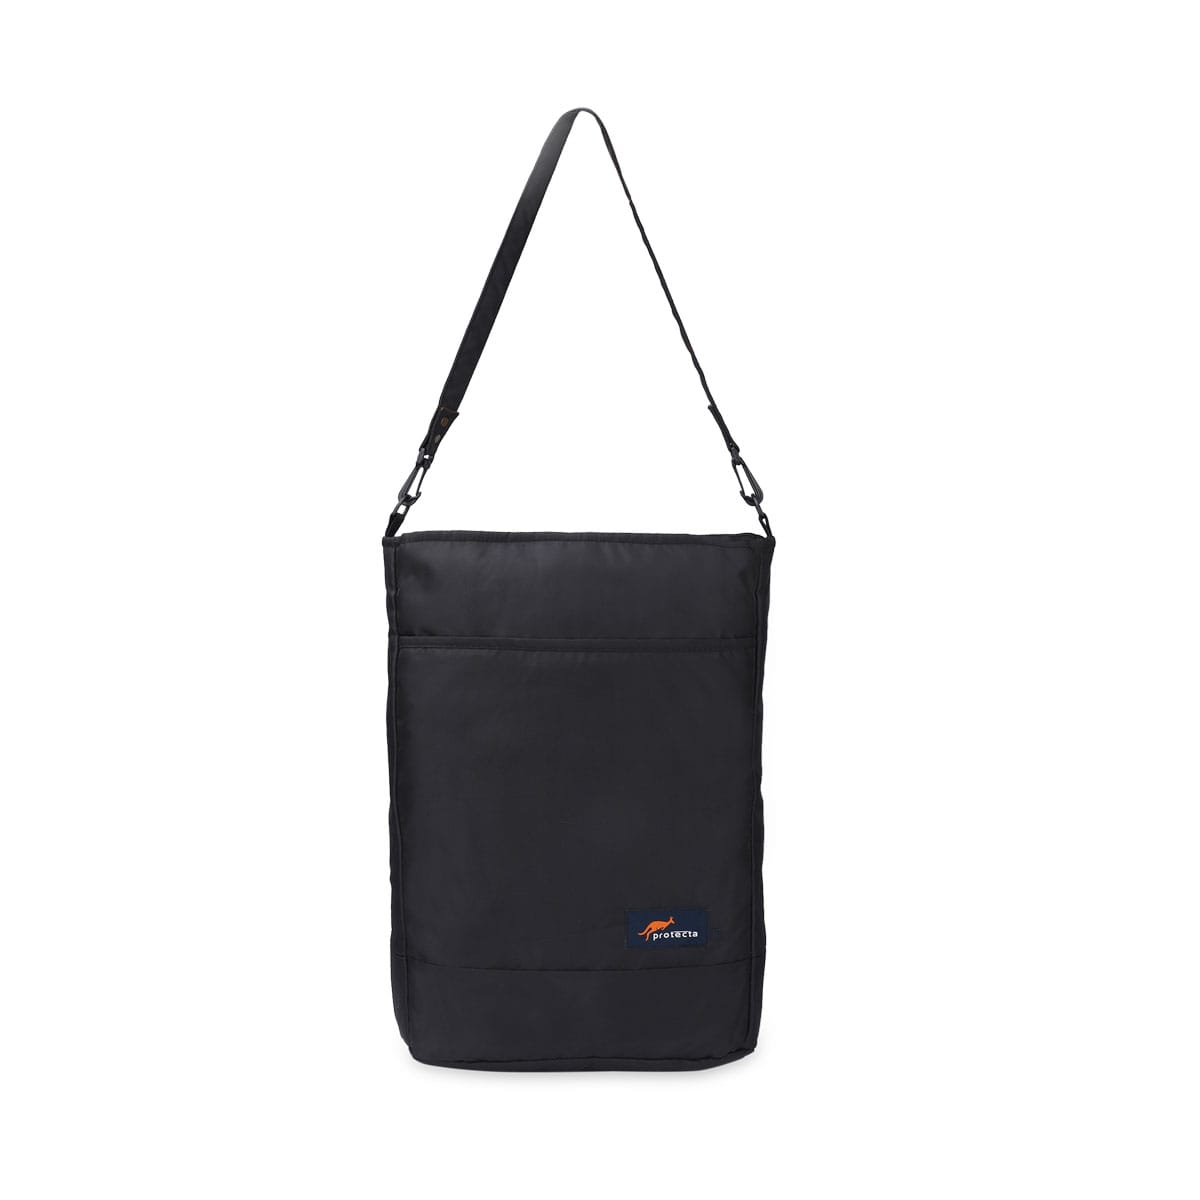 Buy ECOSUSI Tote Bag Convertible Backpack for Women Vegan Leather Handbag  Multifuction Shoulder Bag at Amazonin